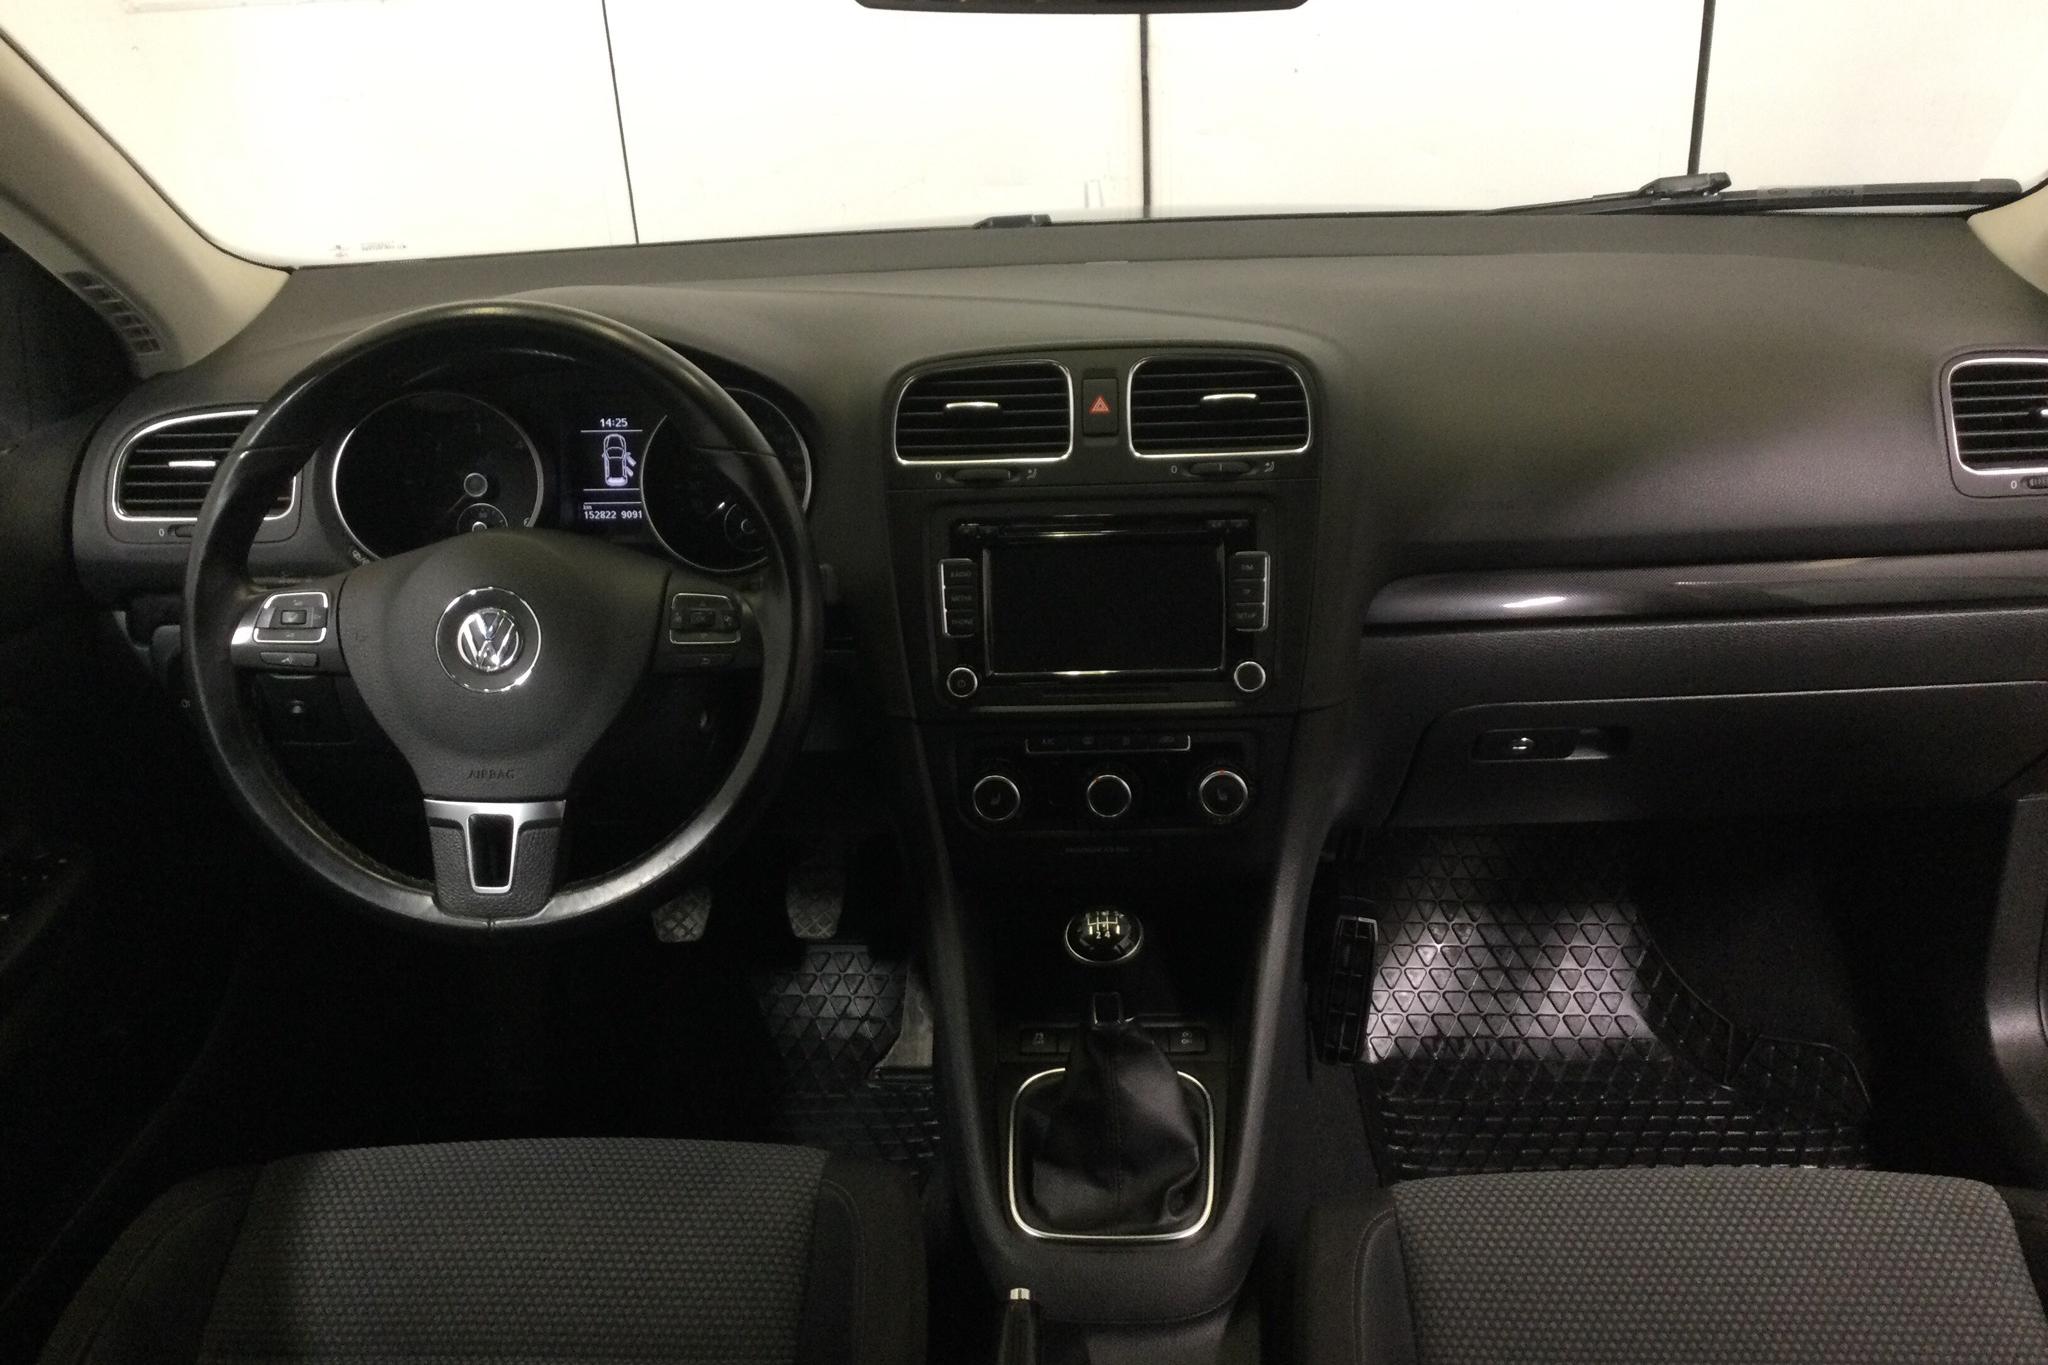 VW Golf VI 1.6 TDI BlueMotion Technology Variant (105hk) - 152 830 km - Manual - black - 2013